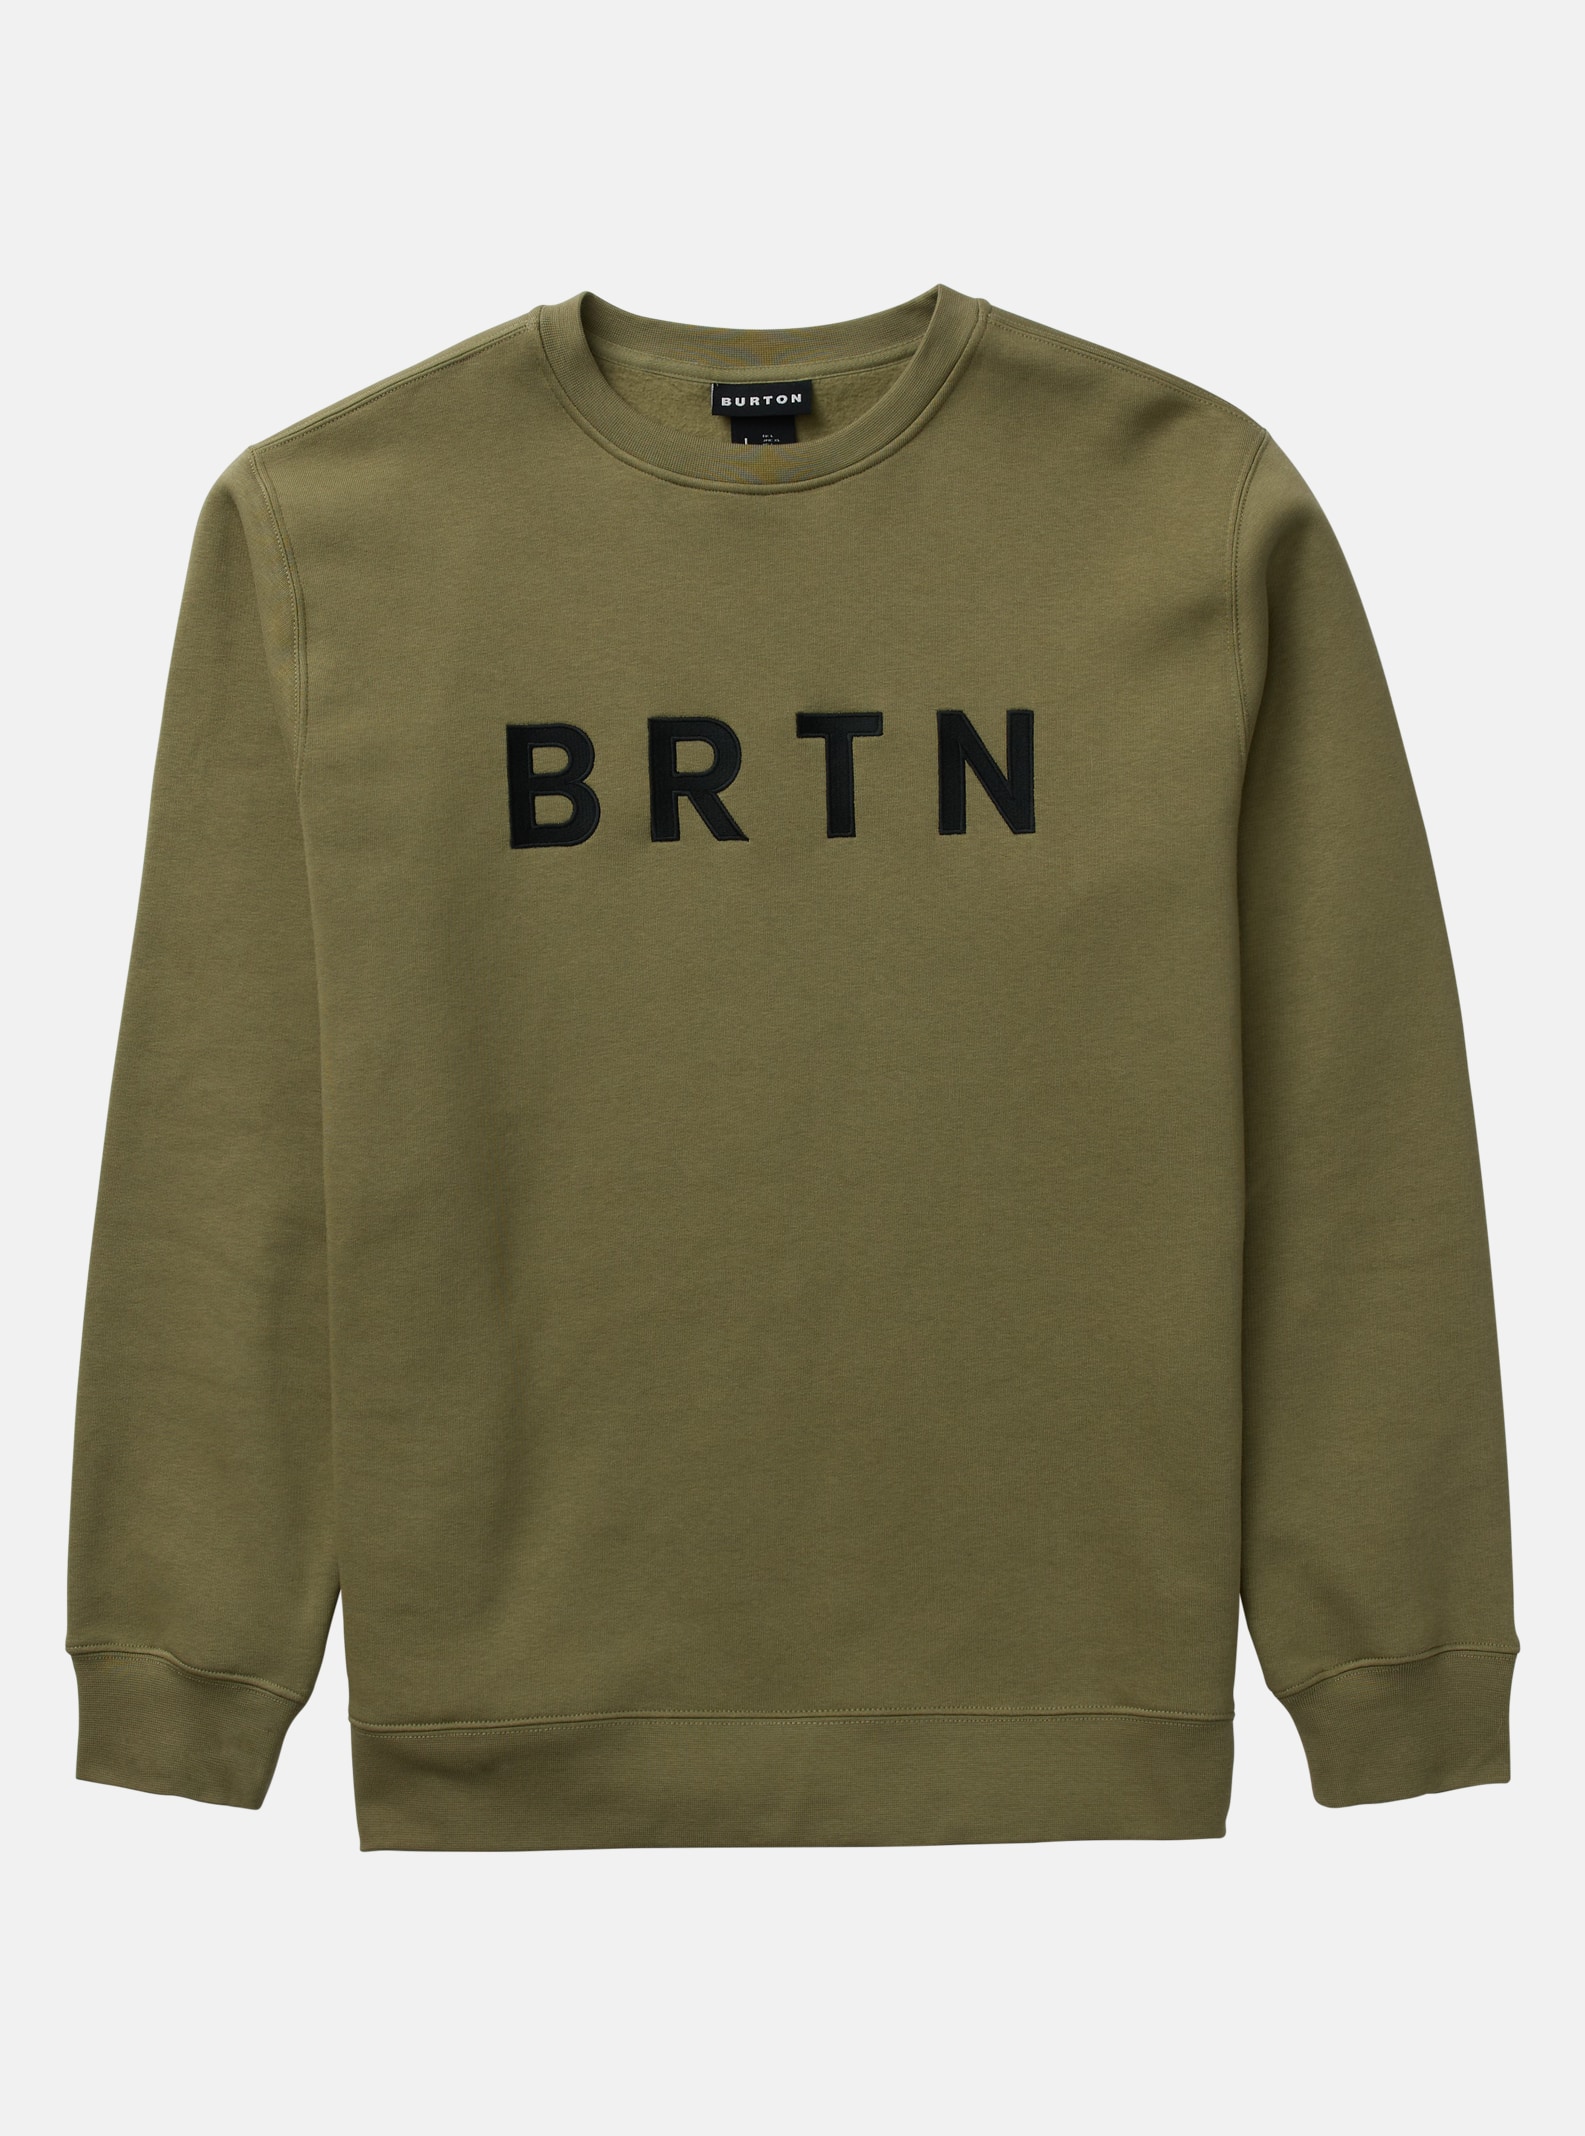 Burton Sweatshirt - BRTN Crewneck, Forest Moss, XXS